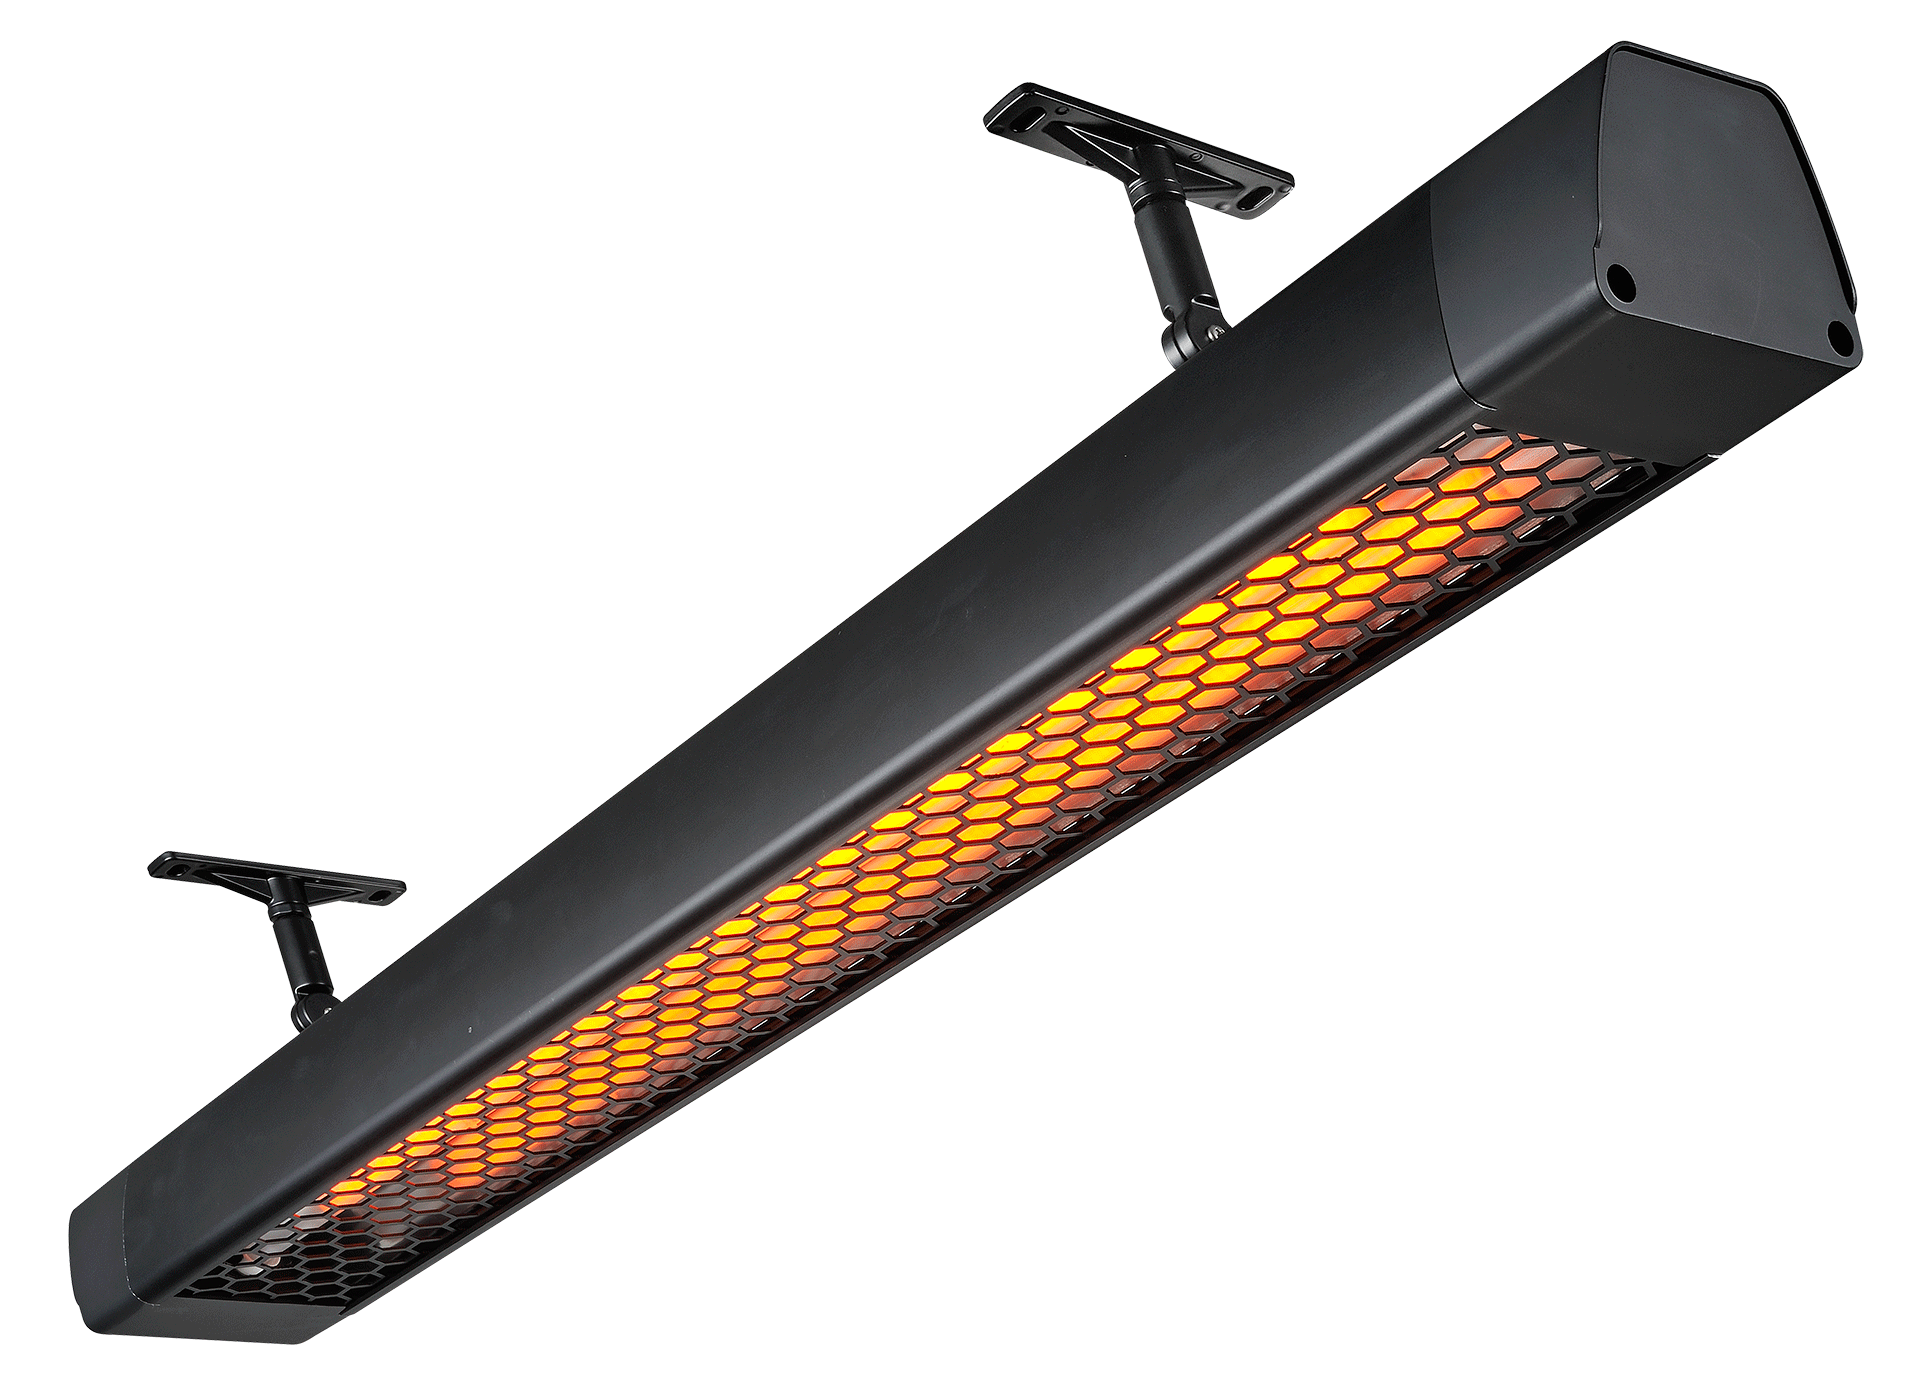 Heatstrip Intense Outdoor Electric Infrared Heater 2200w